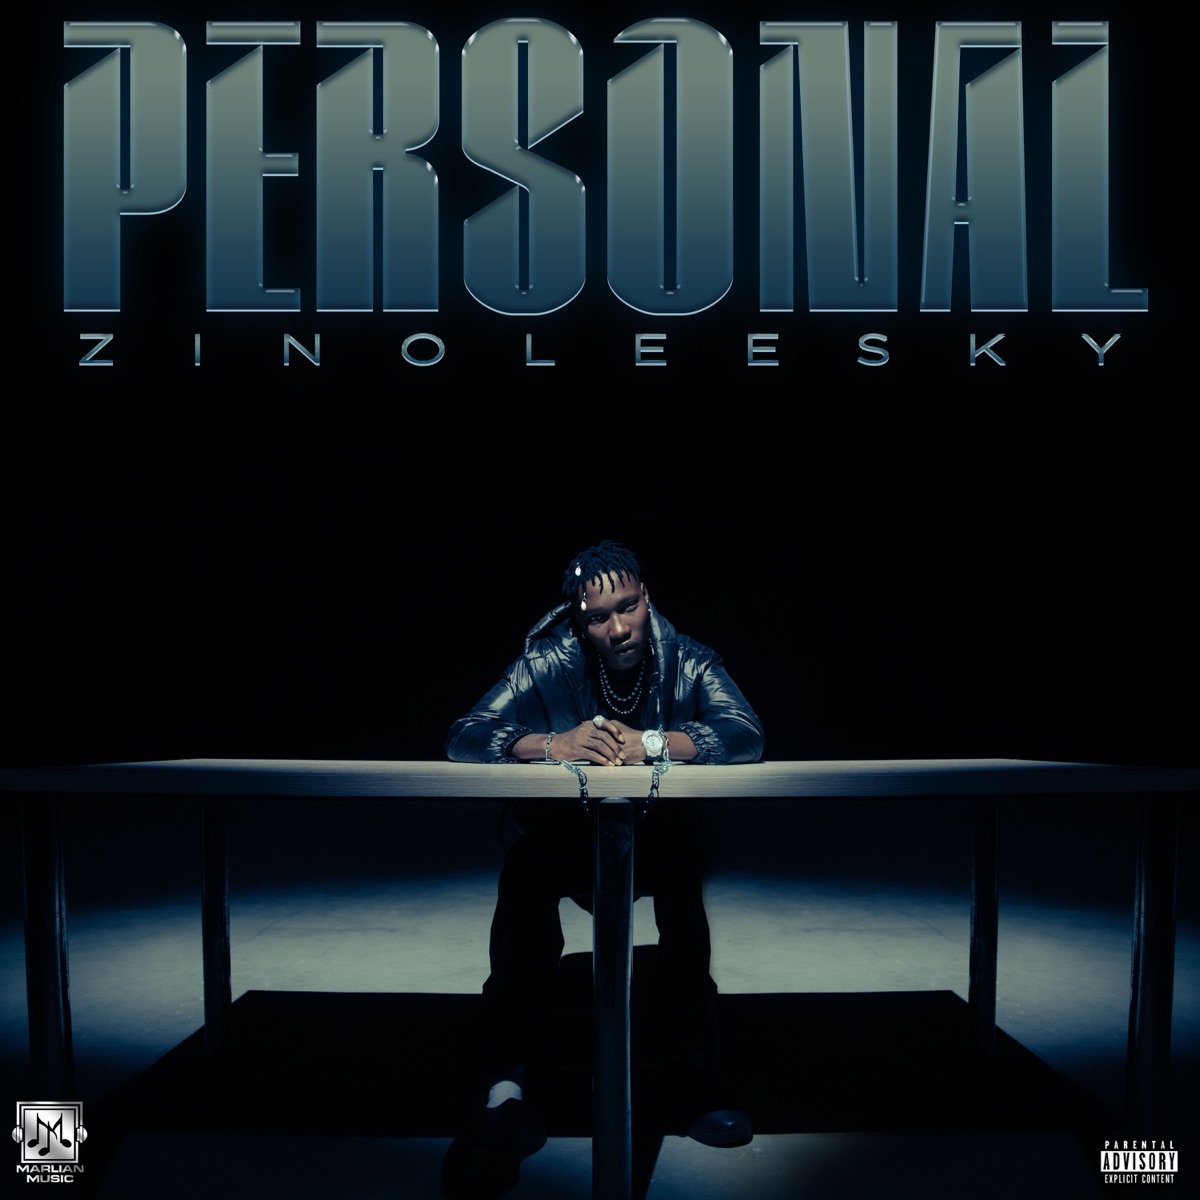 Zinoleesky - Personal - Single